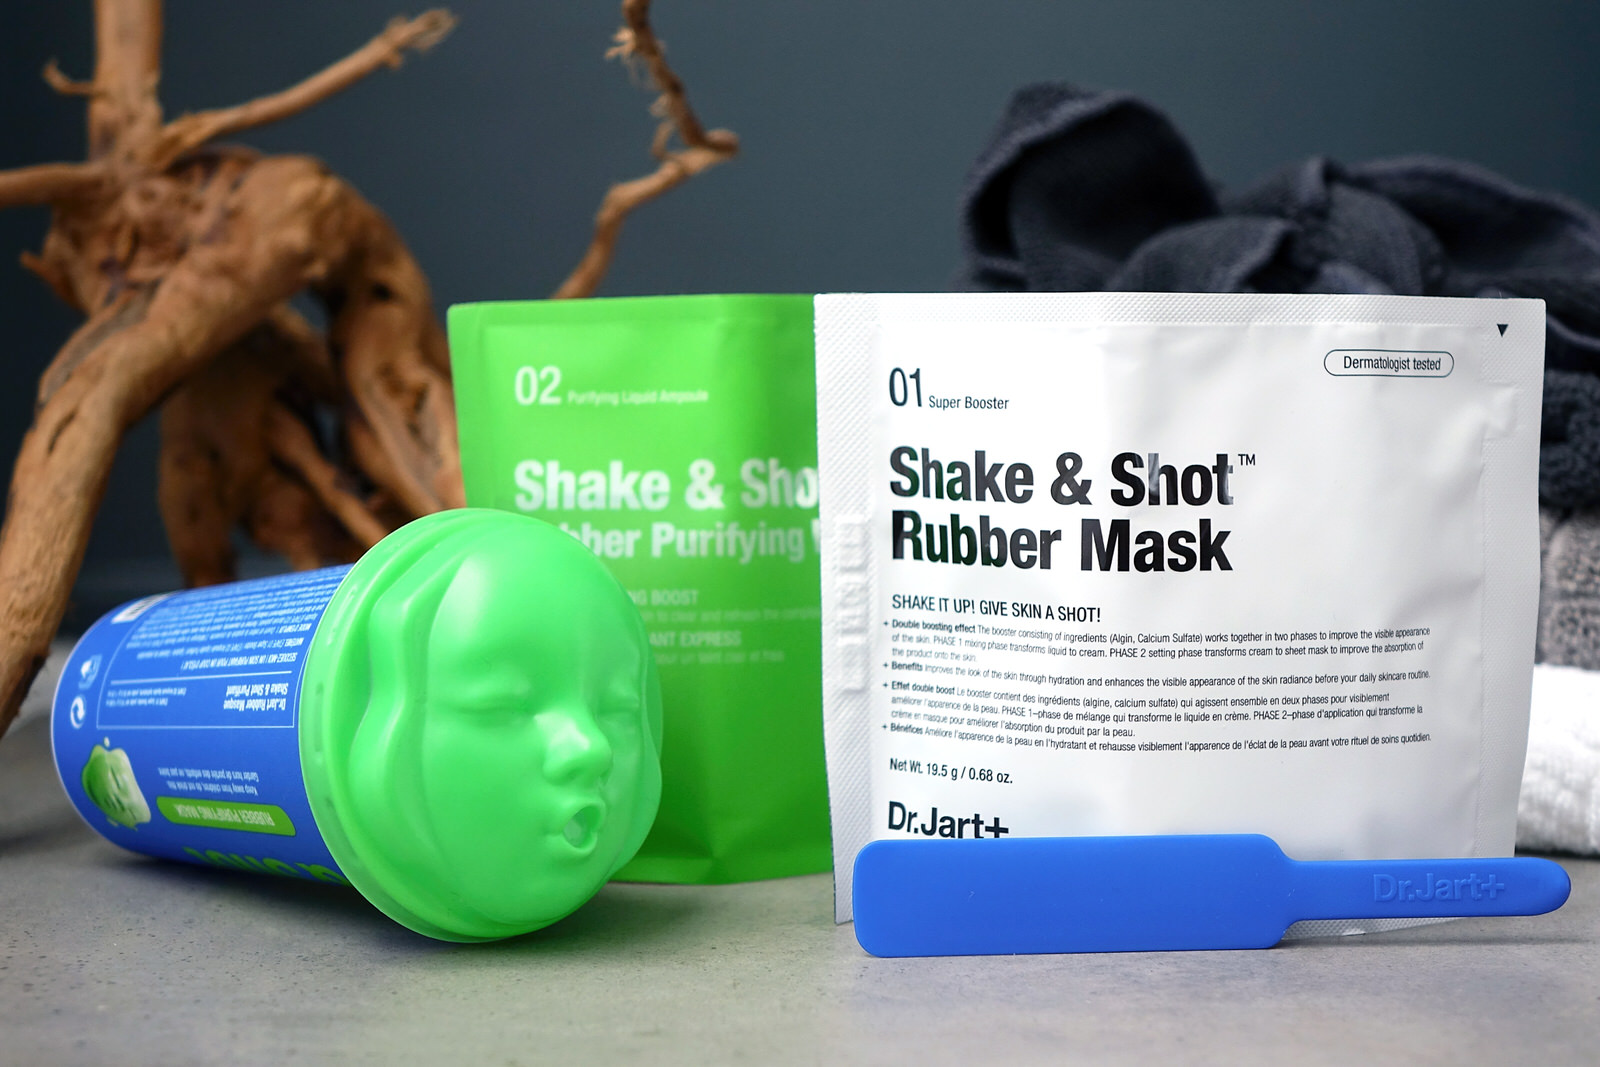 Le dernier masque Shake and Shot du Dr Jart, Rubber Mask purifiant